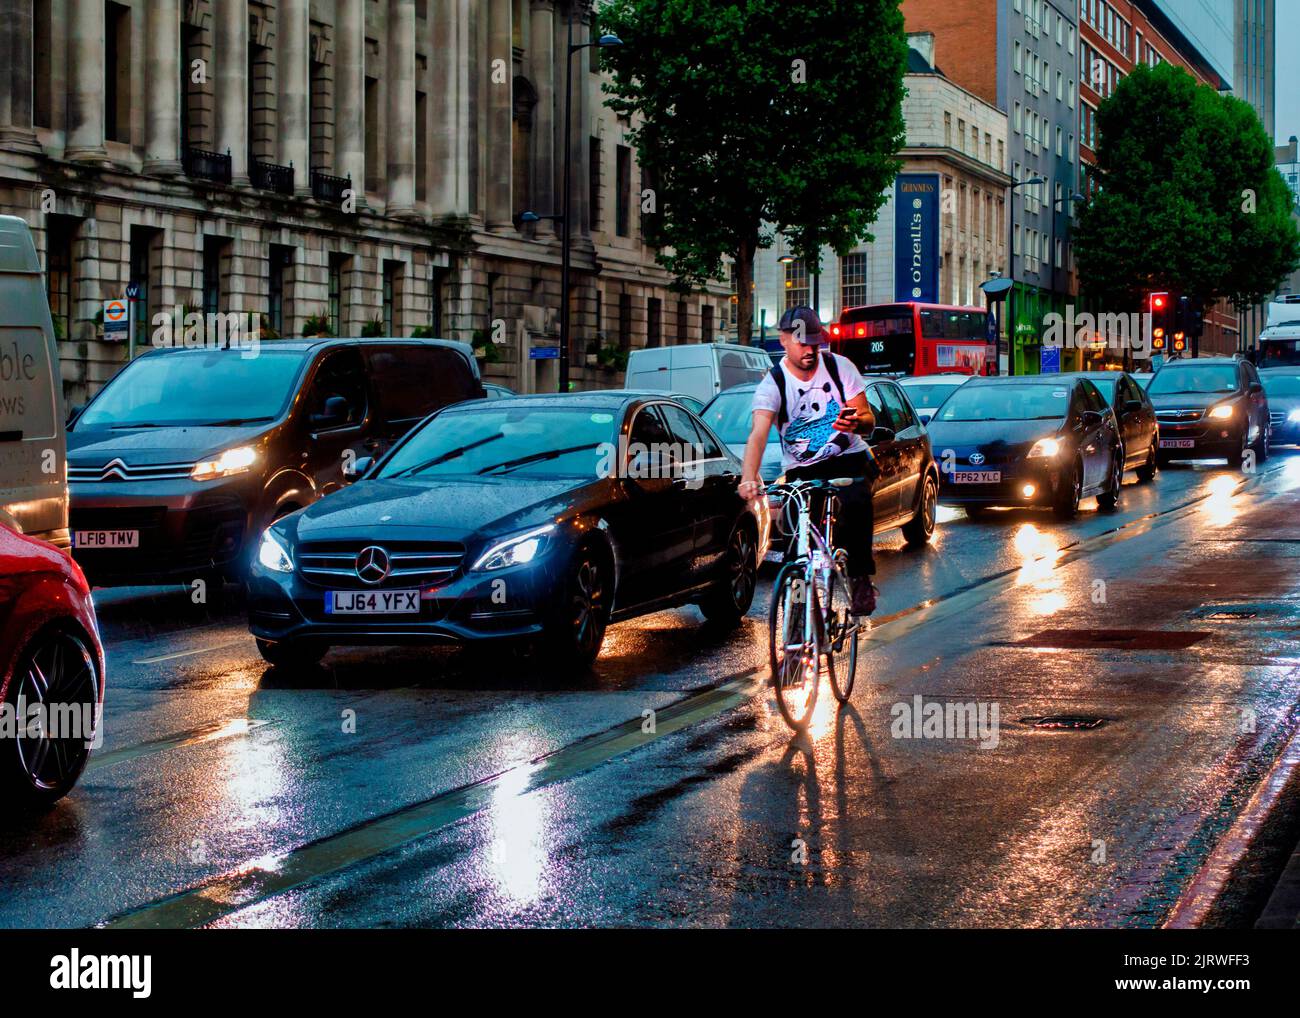 London Traffic,Jam,Euston Road,Raining,Cycliste,on Mobile,No Lights,Dusk,London,England Stockfoto